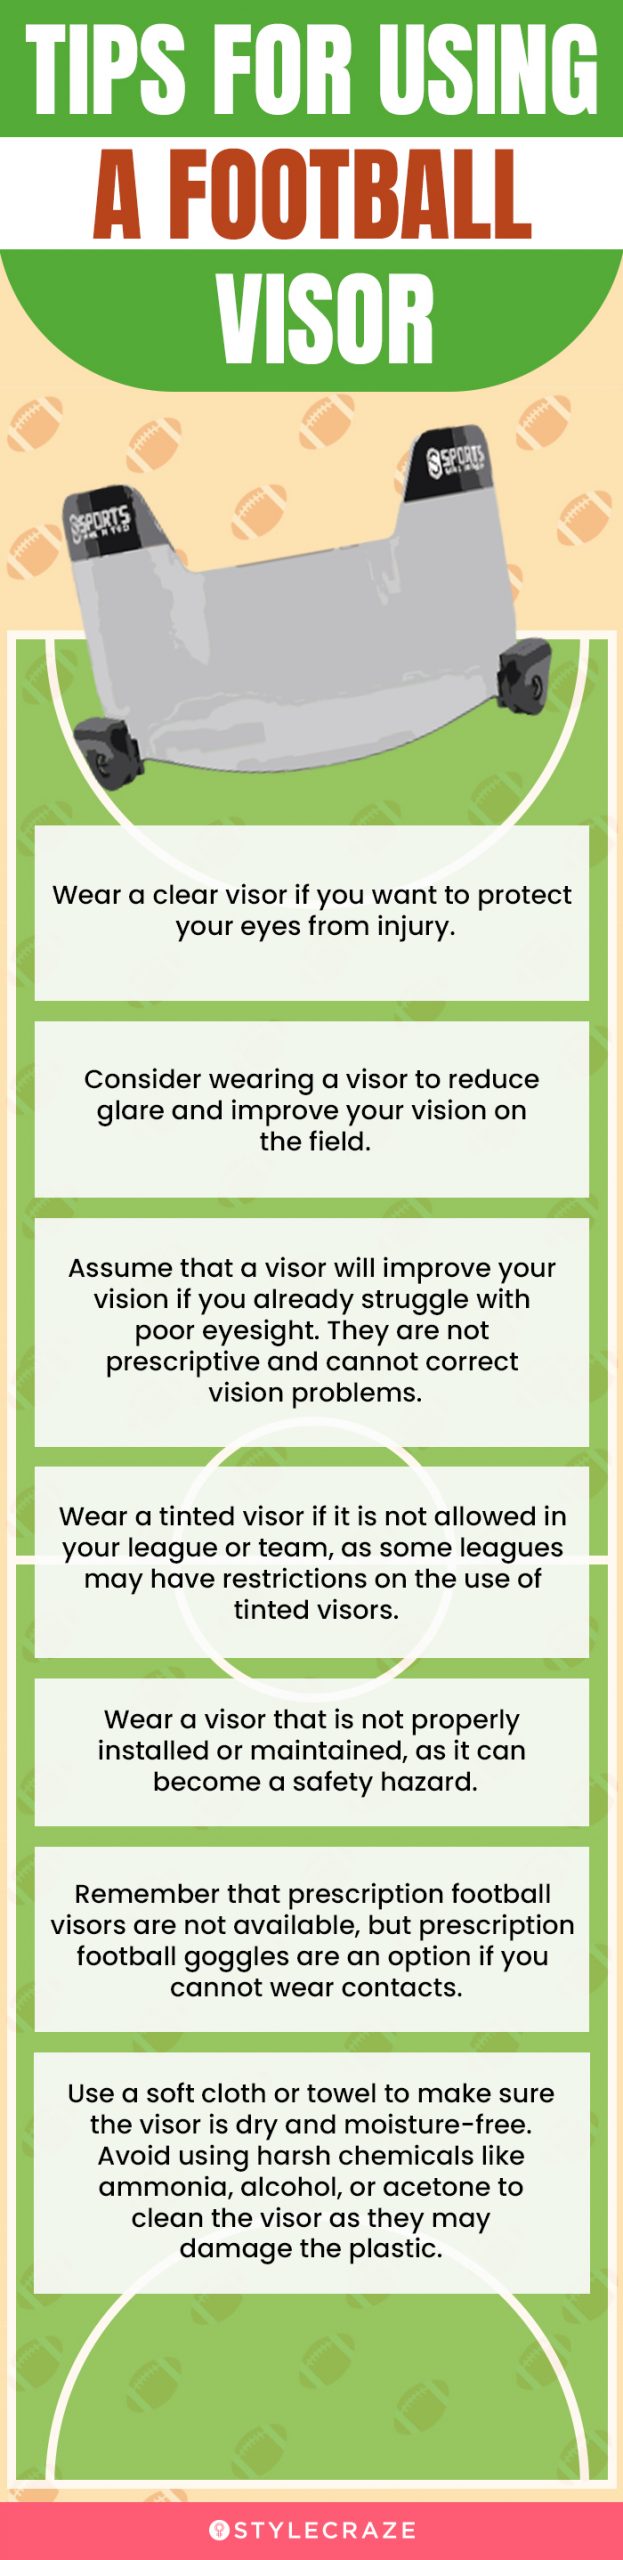 Tips For Using A Football Visor (infographic)